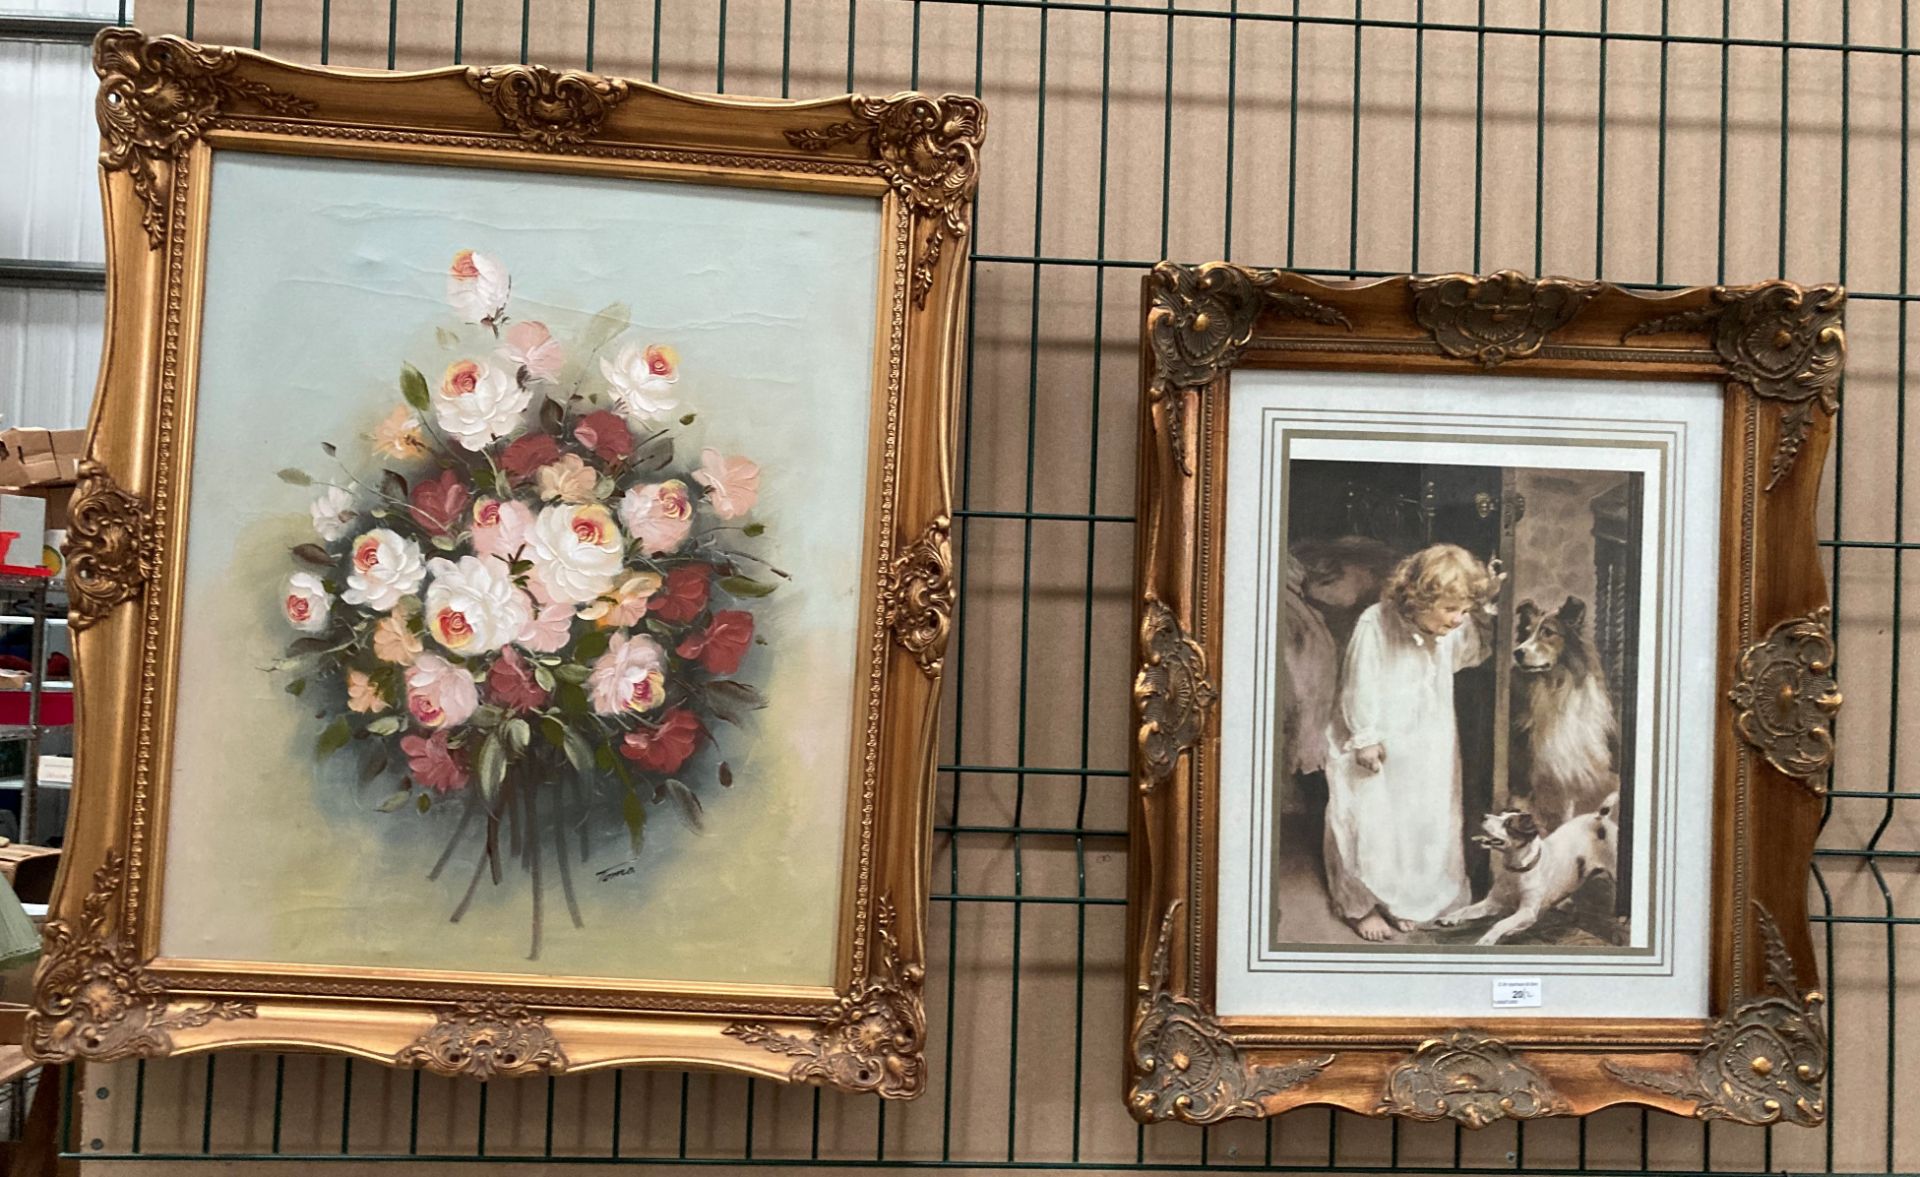 Toma Modern oil 'still life - flower bouquet' in ornate gilt frame 60 x 50cm and an ornate gilt